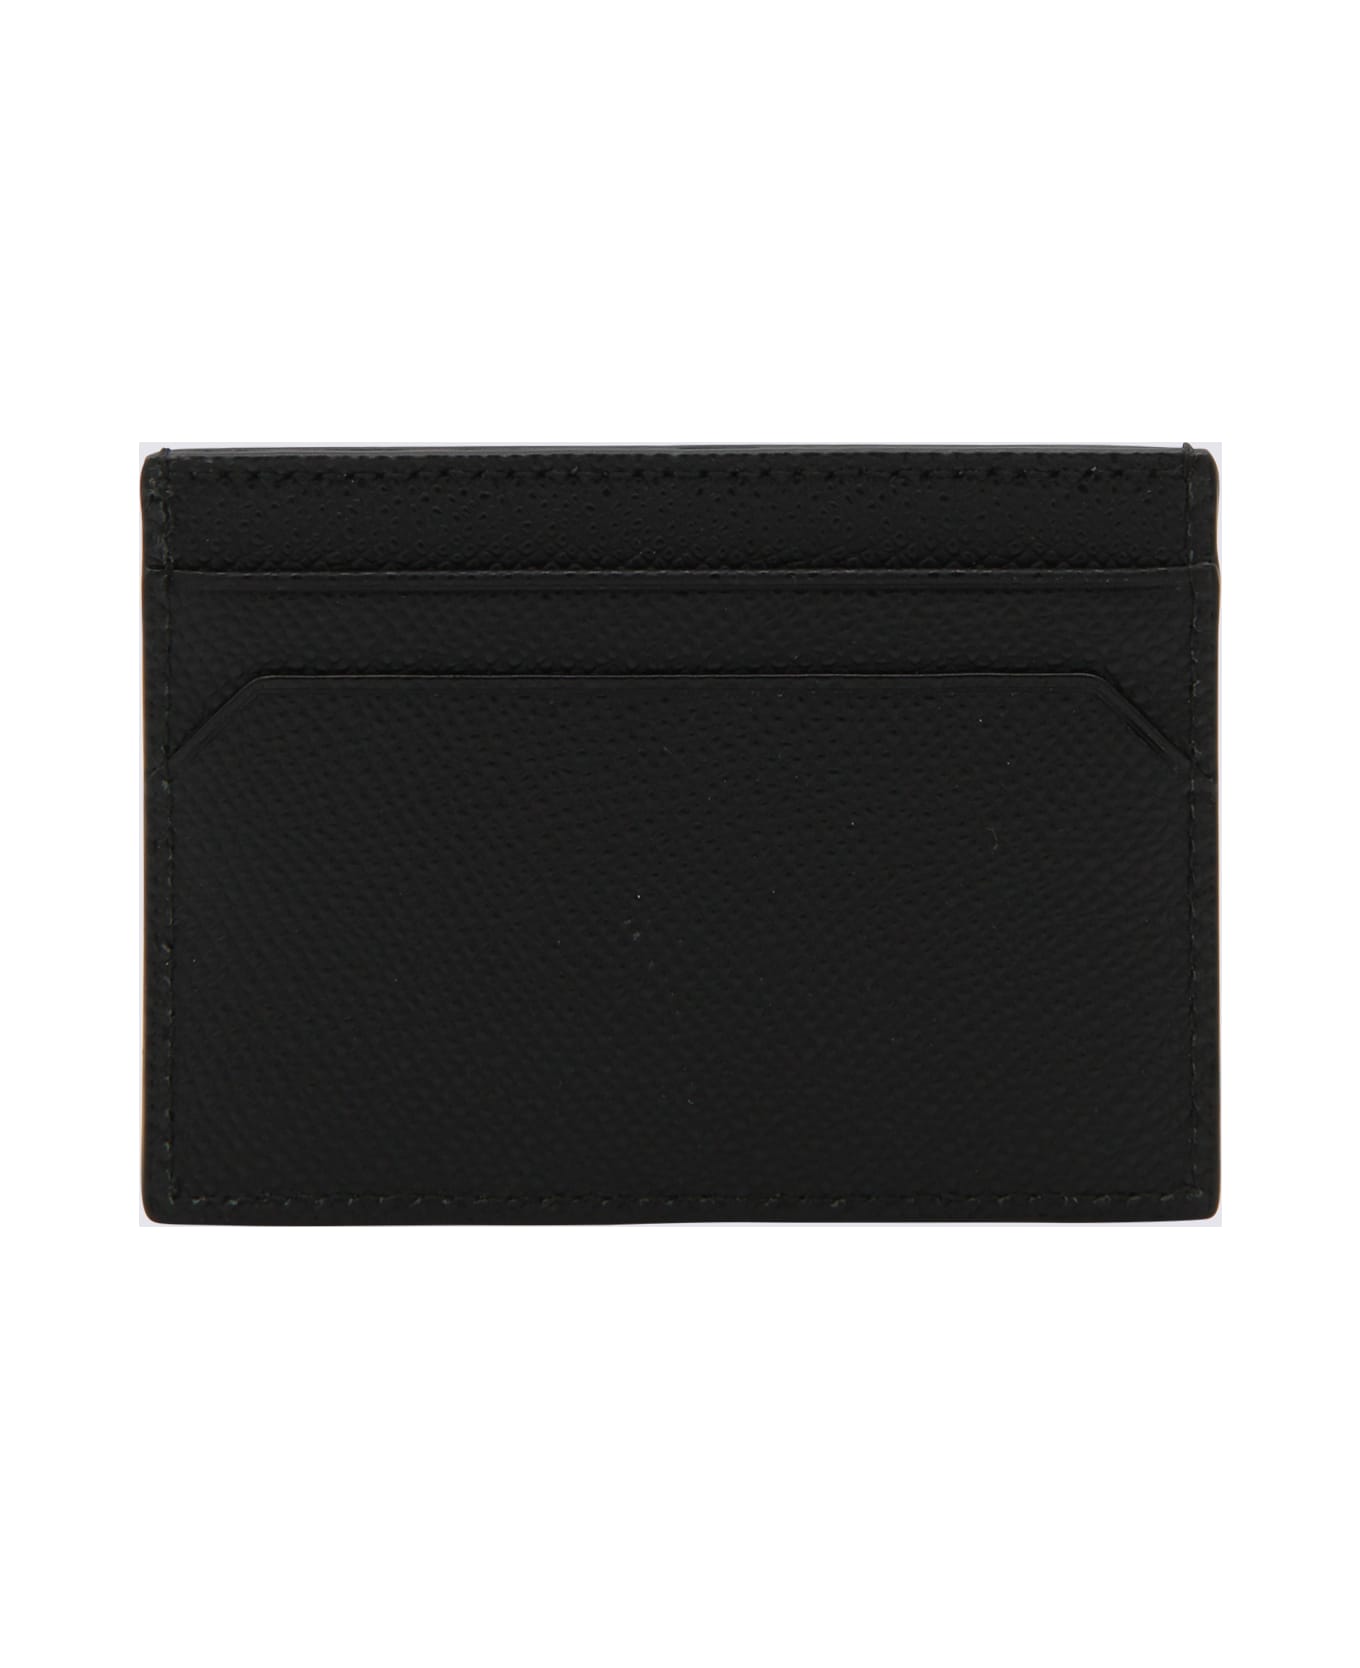 Bally Black Leather Cardholder - Black 財布